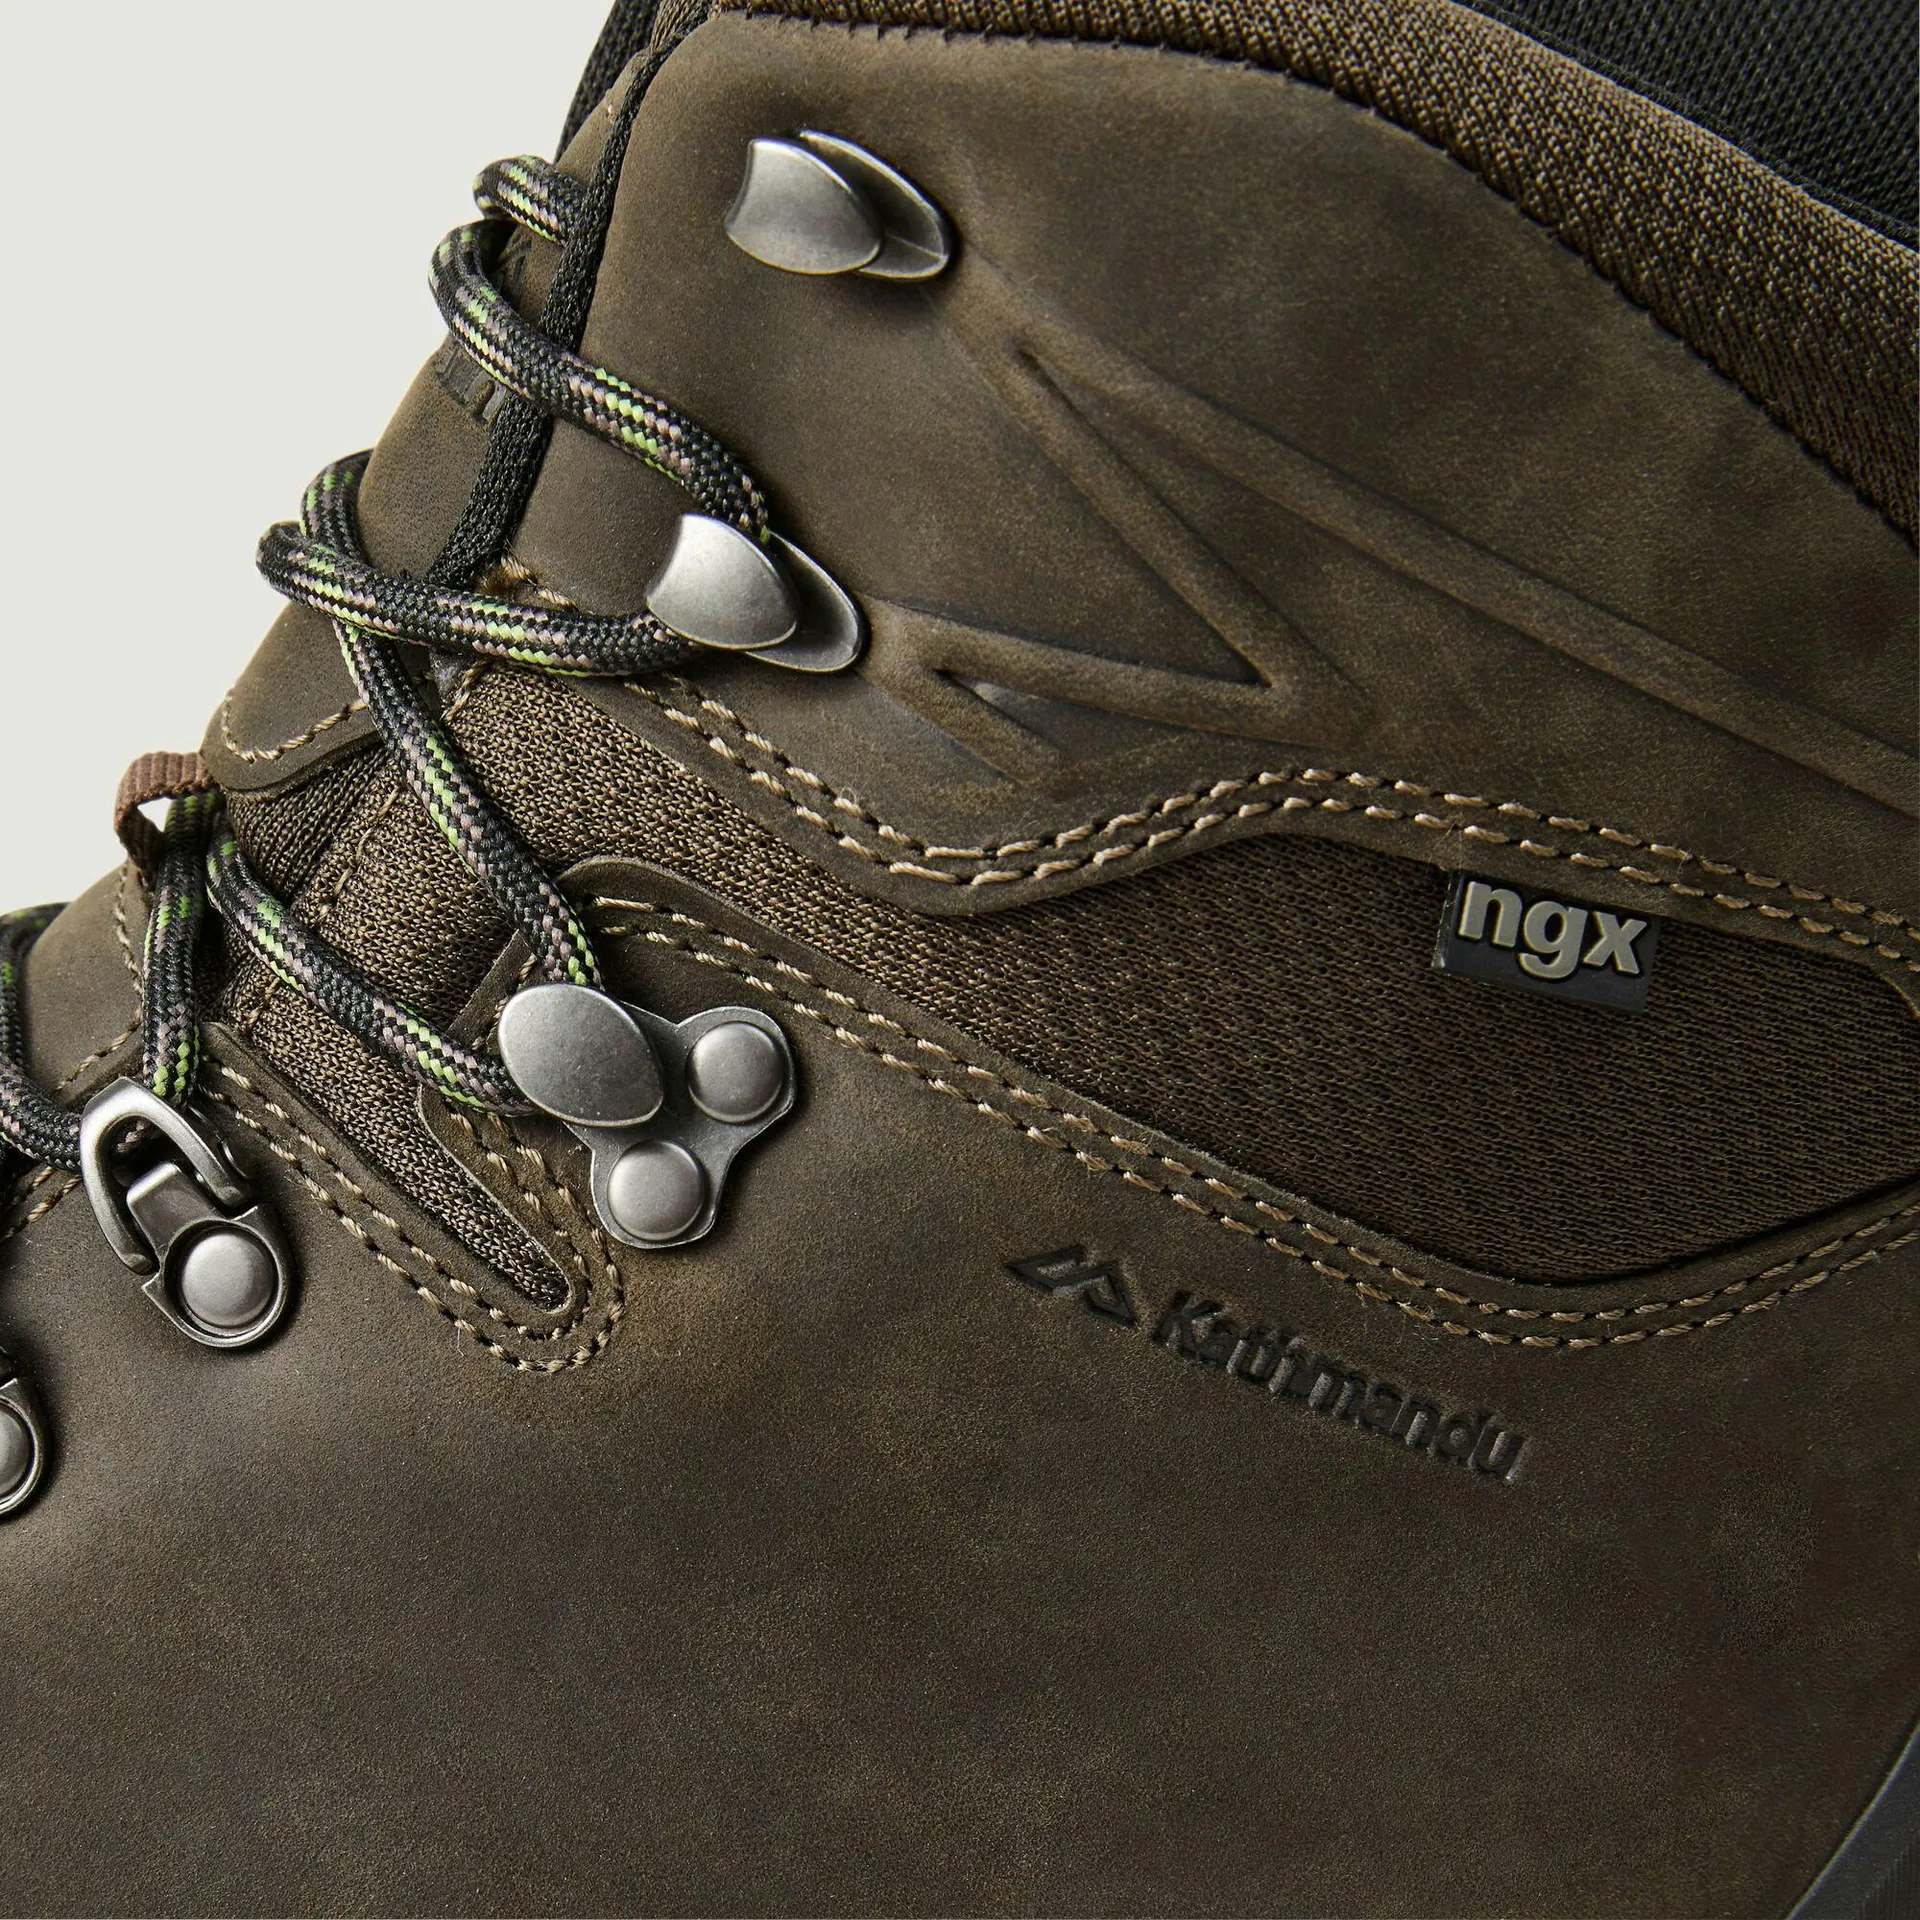 Tiber ngx Men's Waterproof Hiking Boots